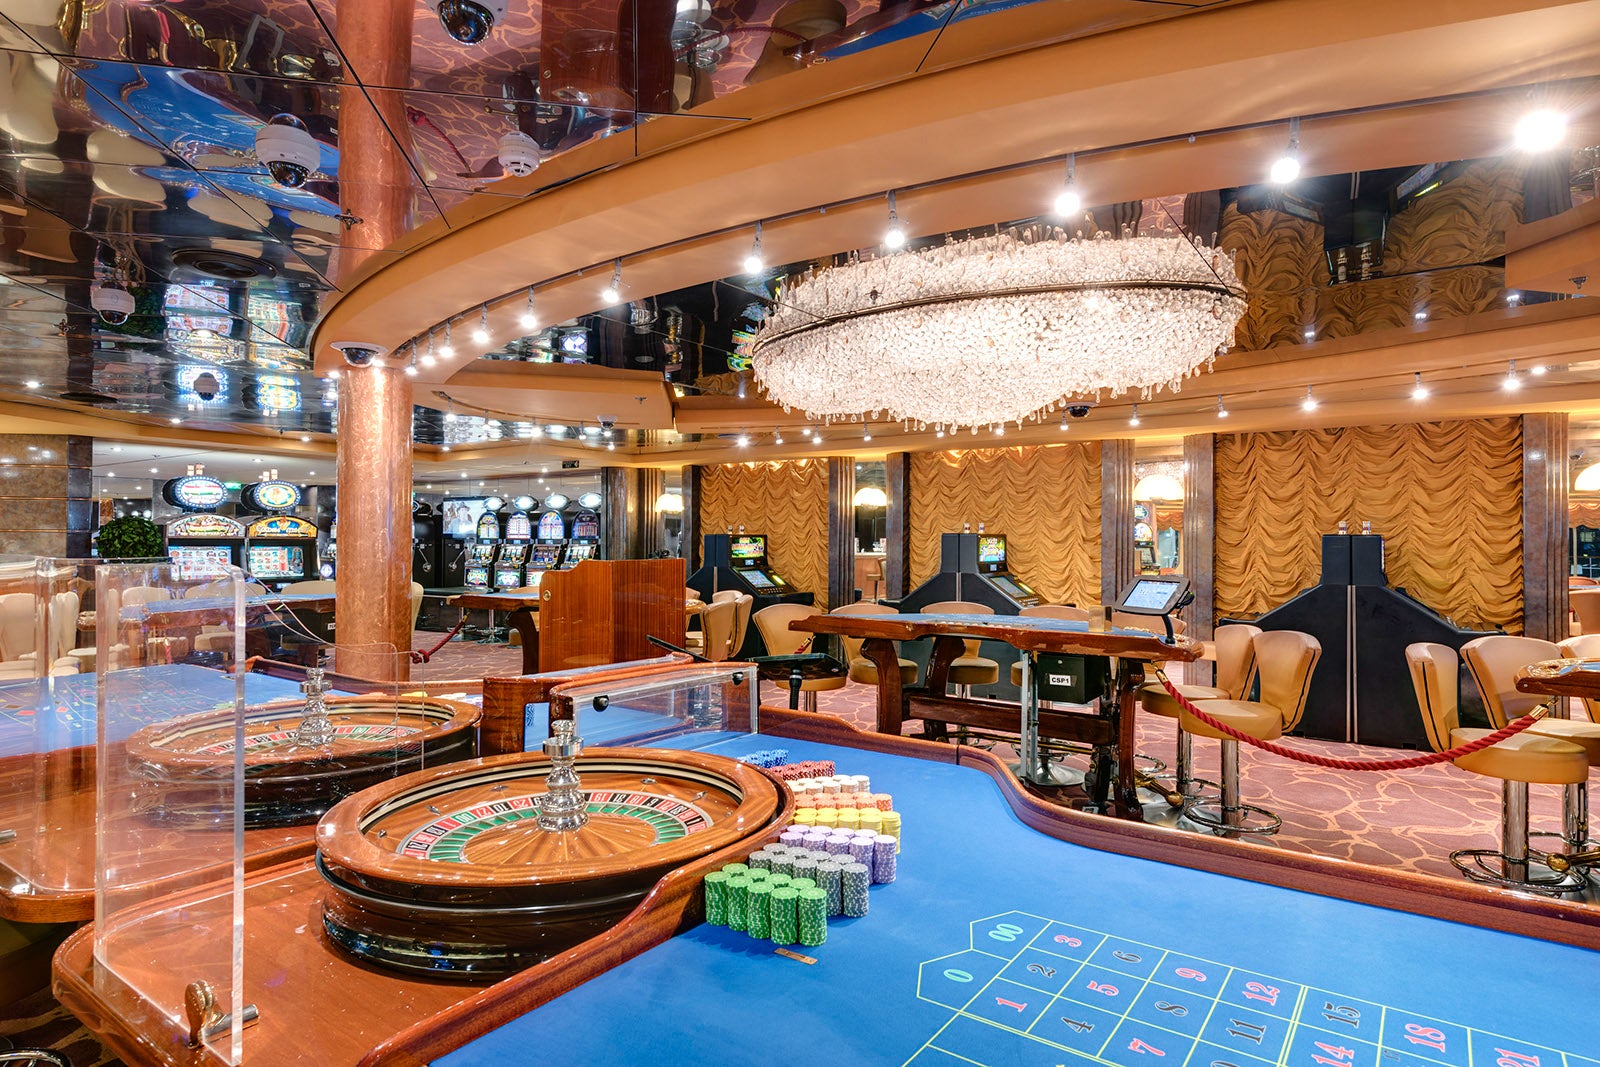 msc cruises casino offers